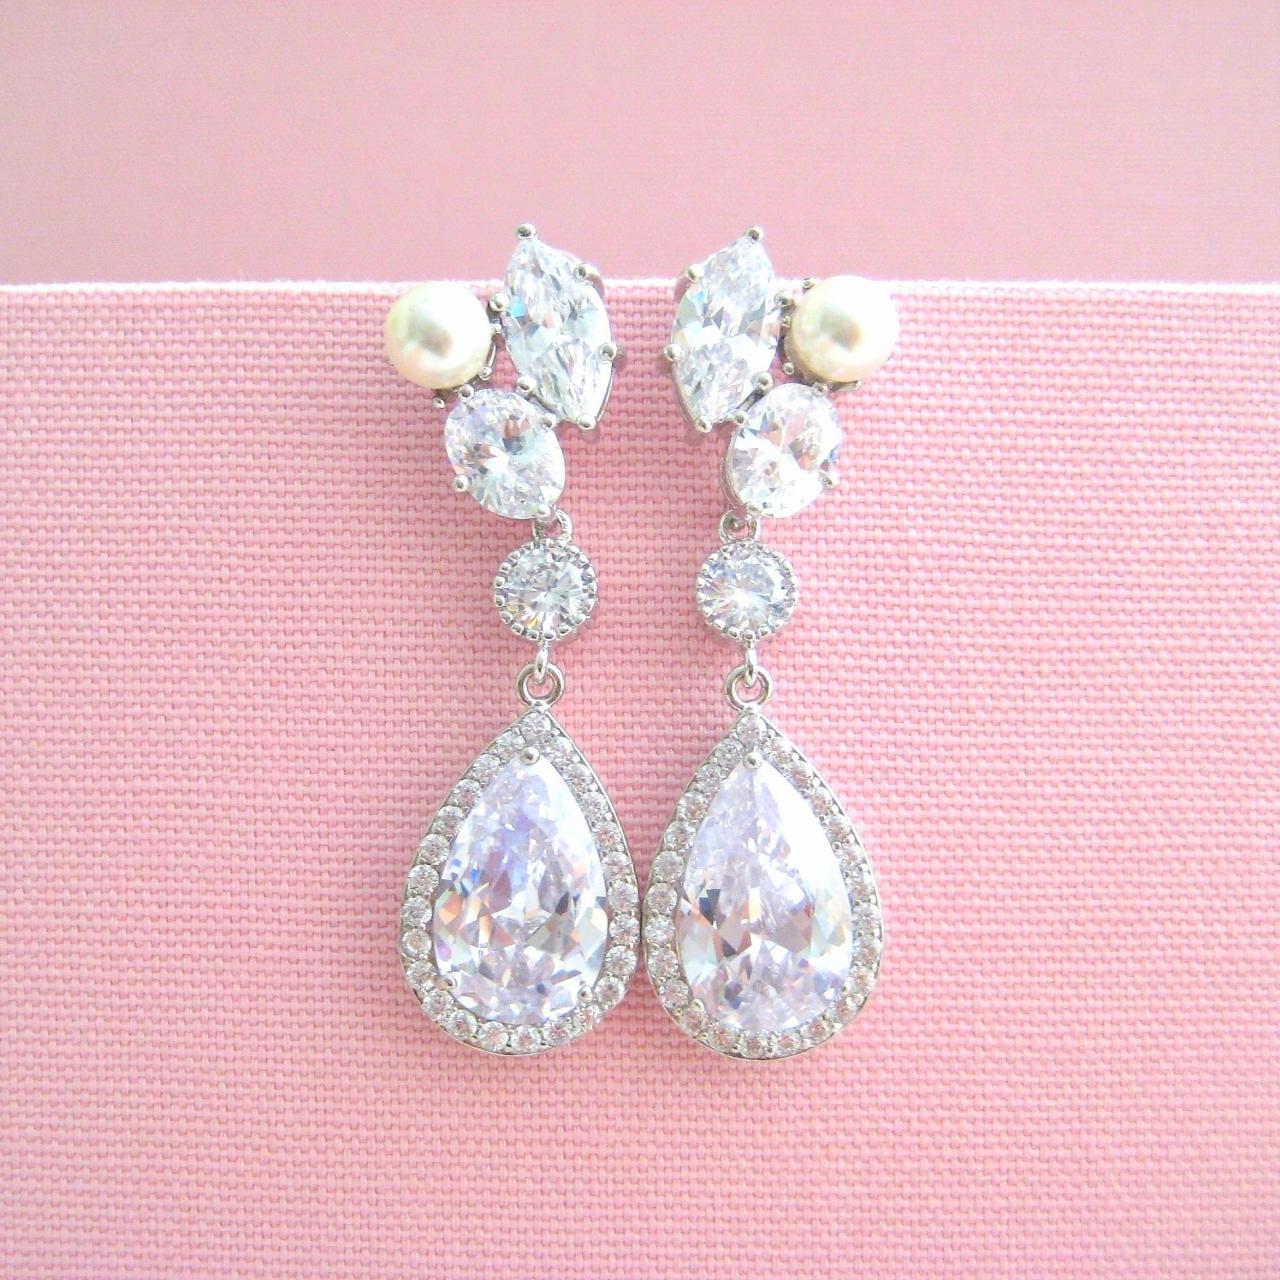 Crystal Bridal Earrings Wedding Teardrop Earrings Long Bridal Earrings Swarovski Pearl Earrings Bridesmaids Gift (e311)